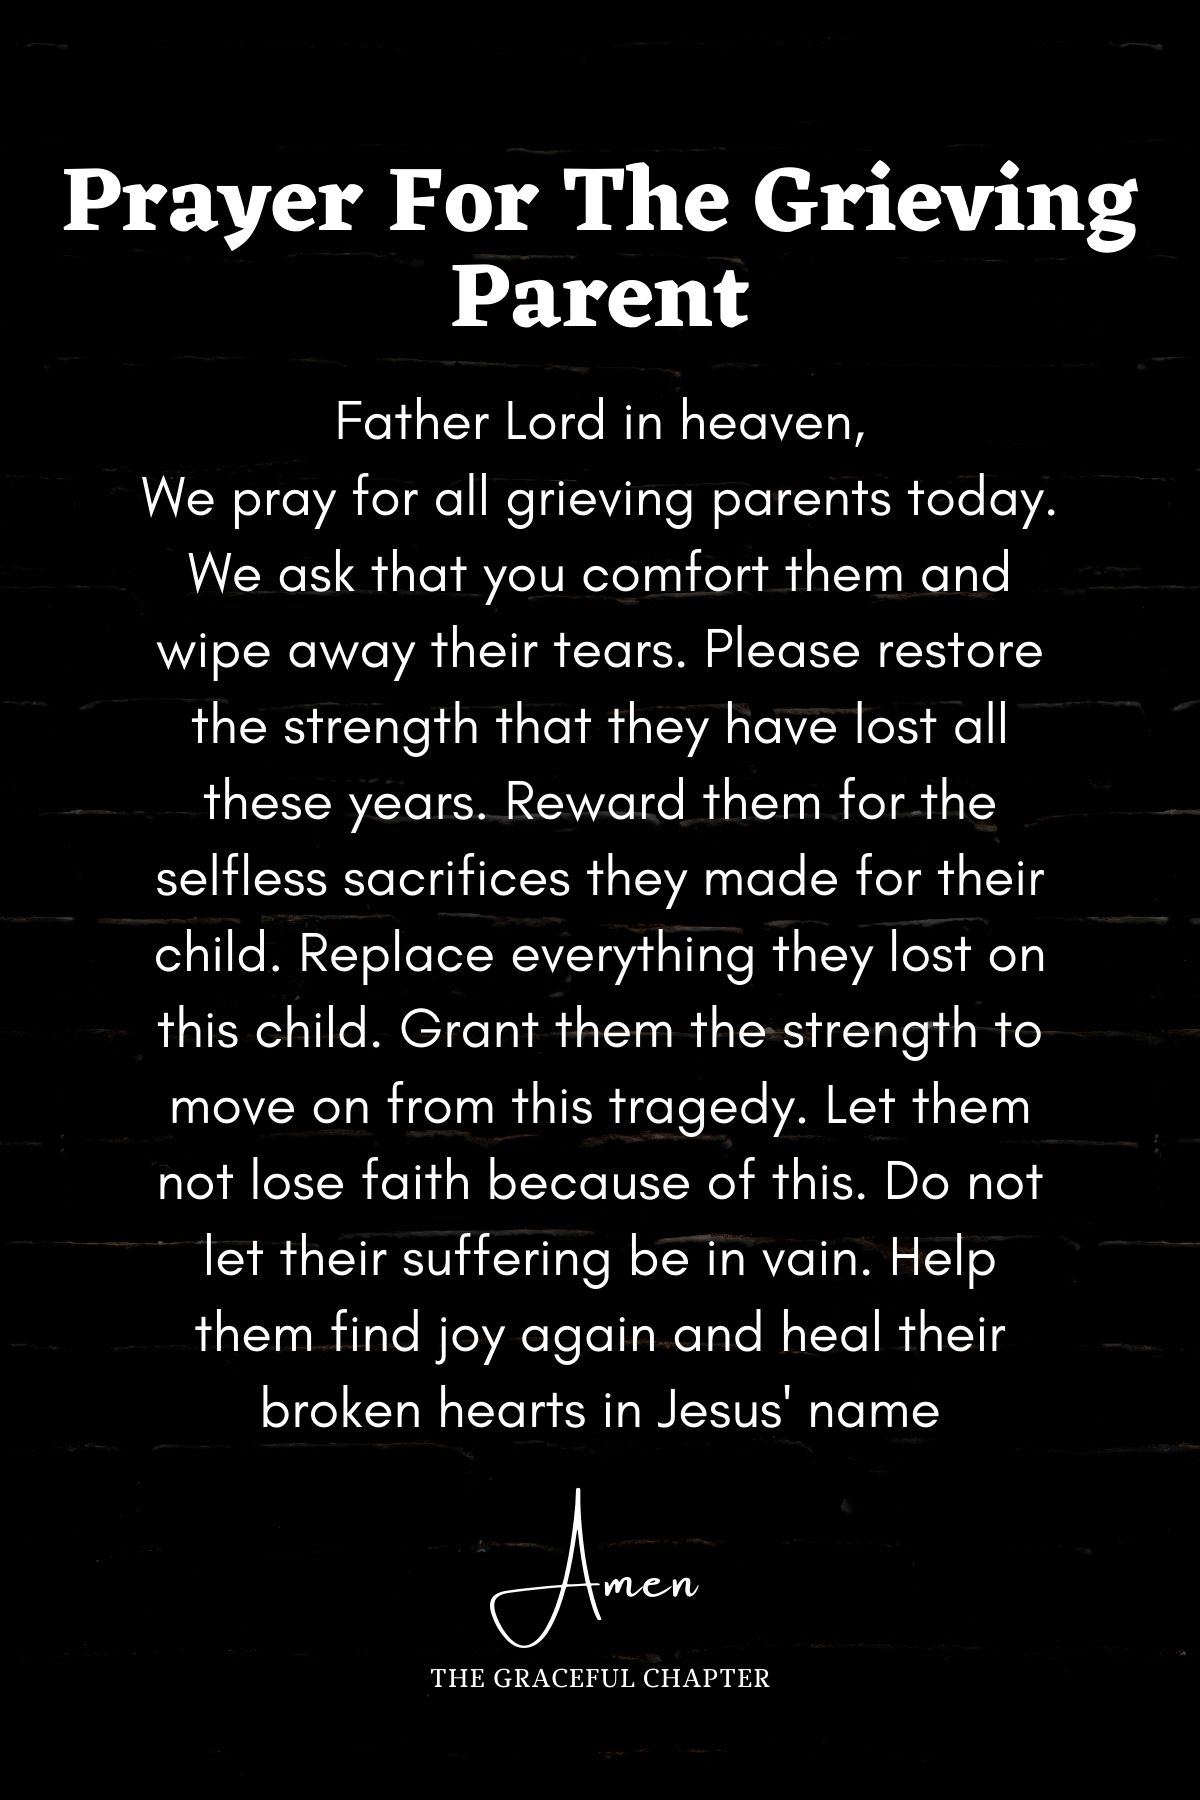 Prayer for the grieving parent